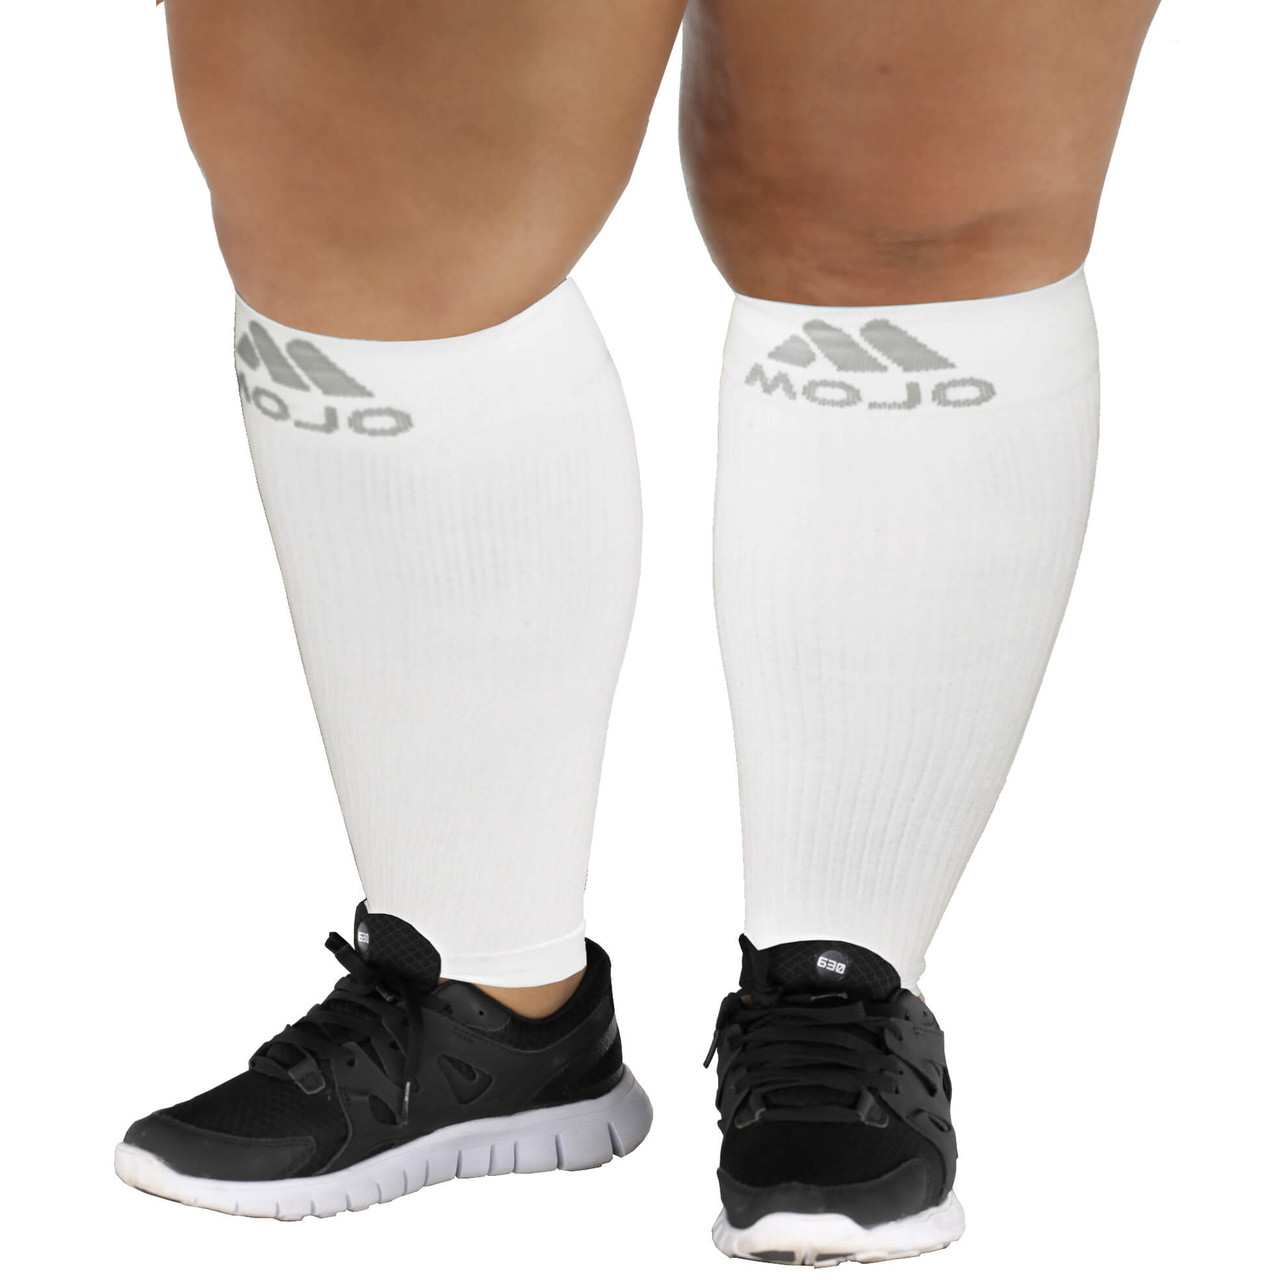 5XL Plus Size Compression Pantyhose for Women 20-30mmHg - Grey, 5X-Large